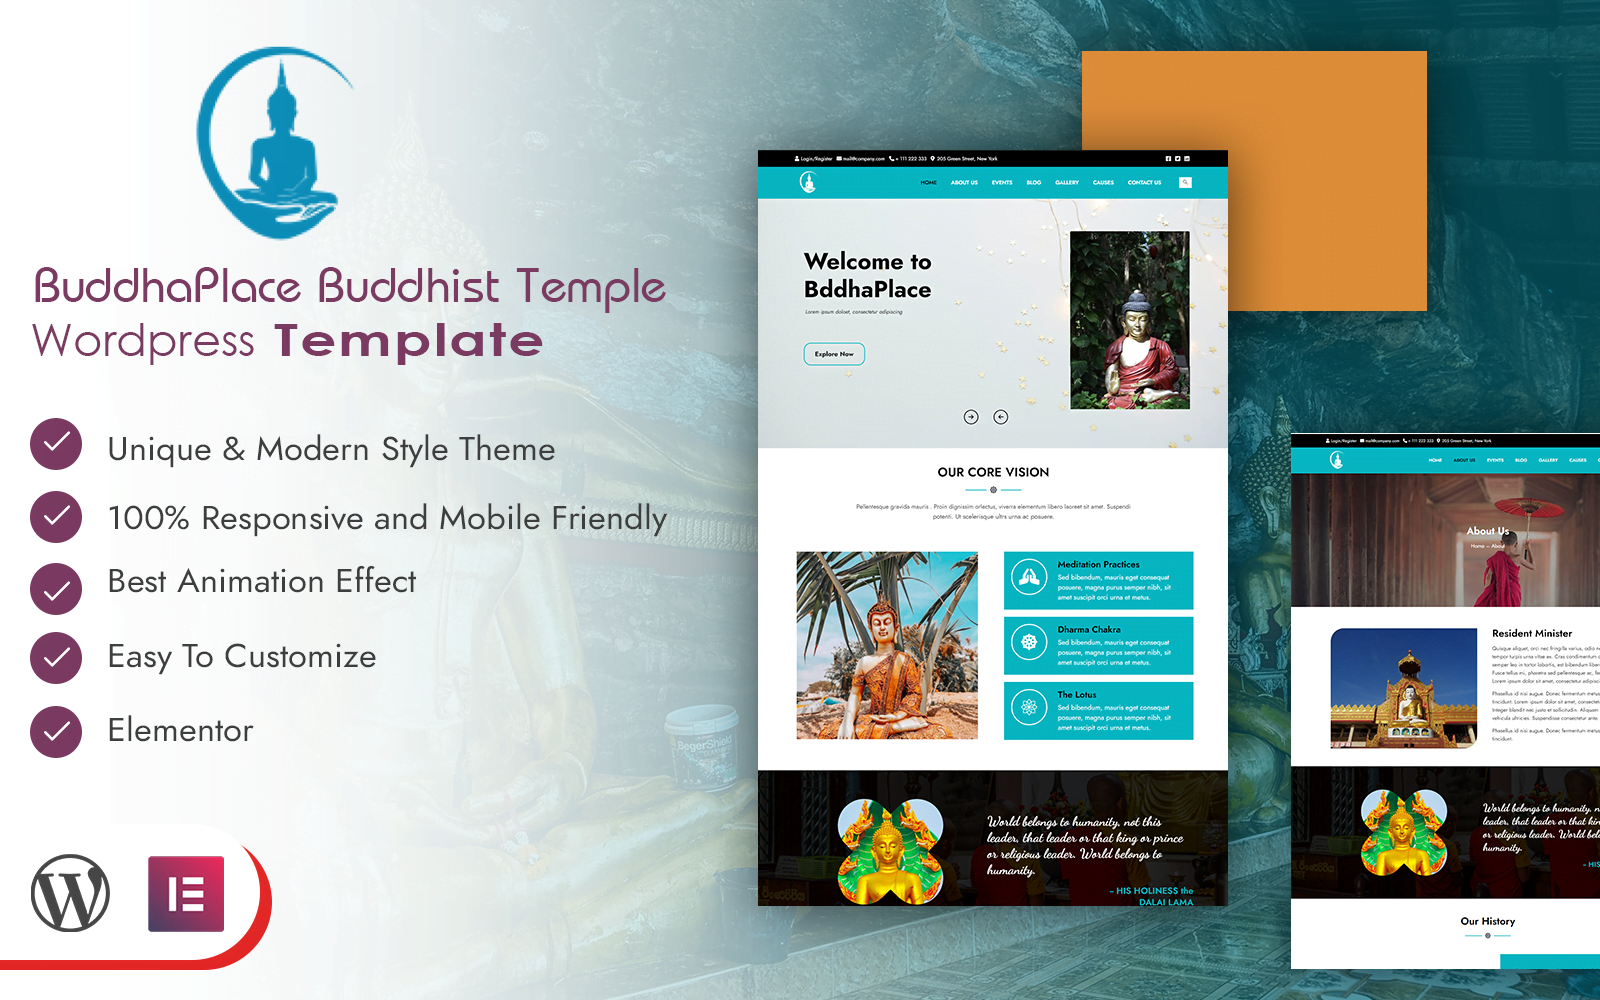 BuddhaPlace Buddhist Temple WordPress Template